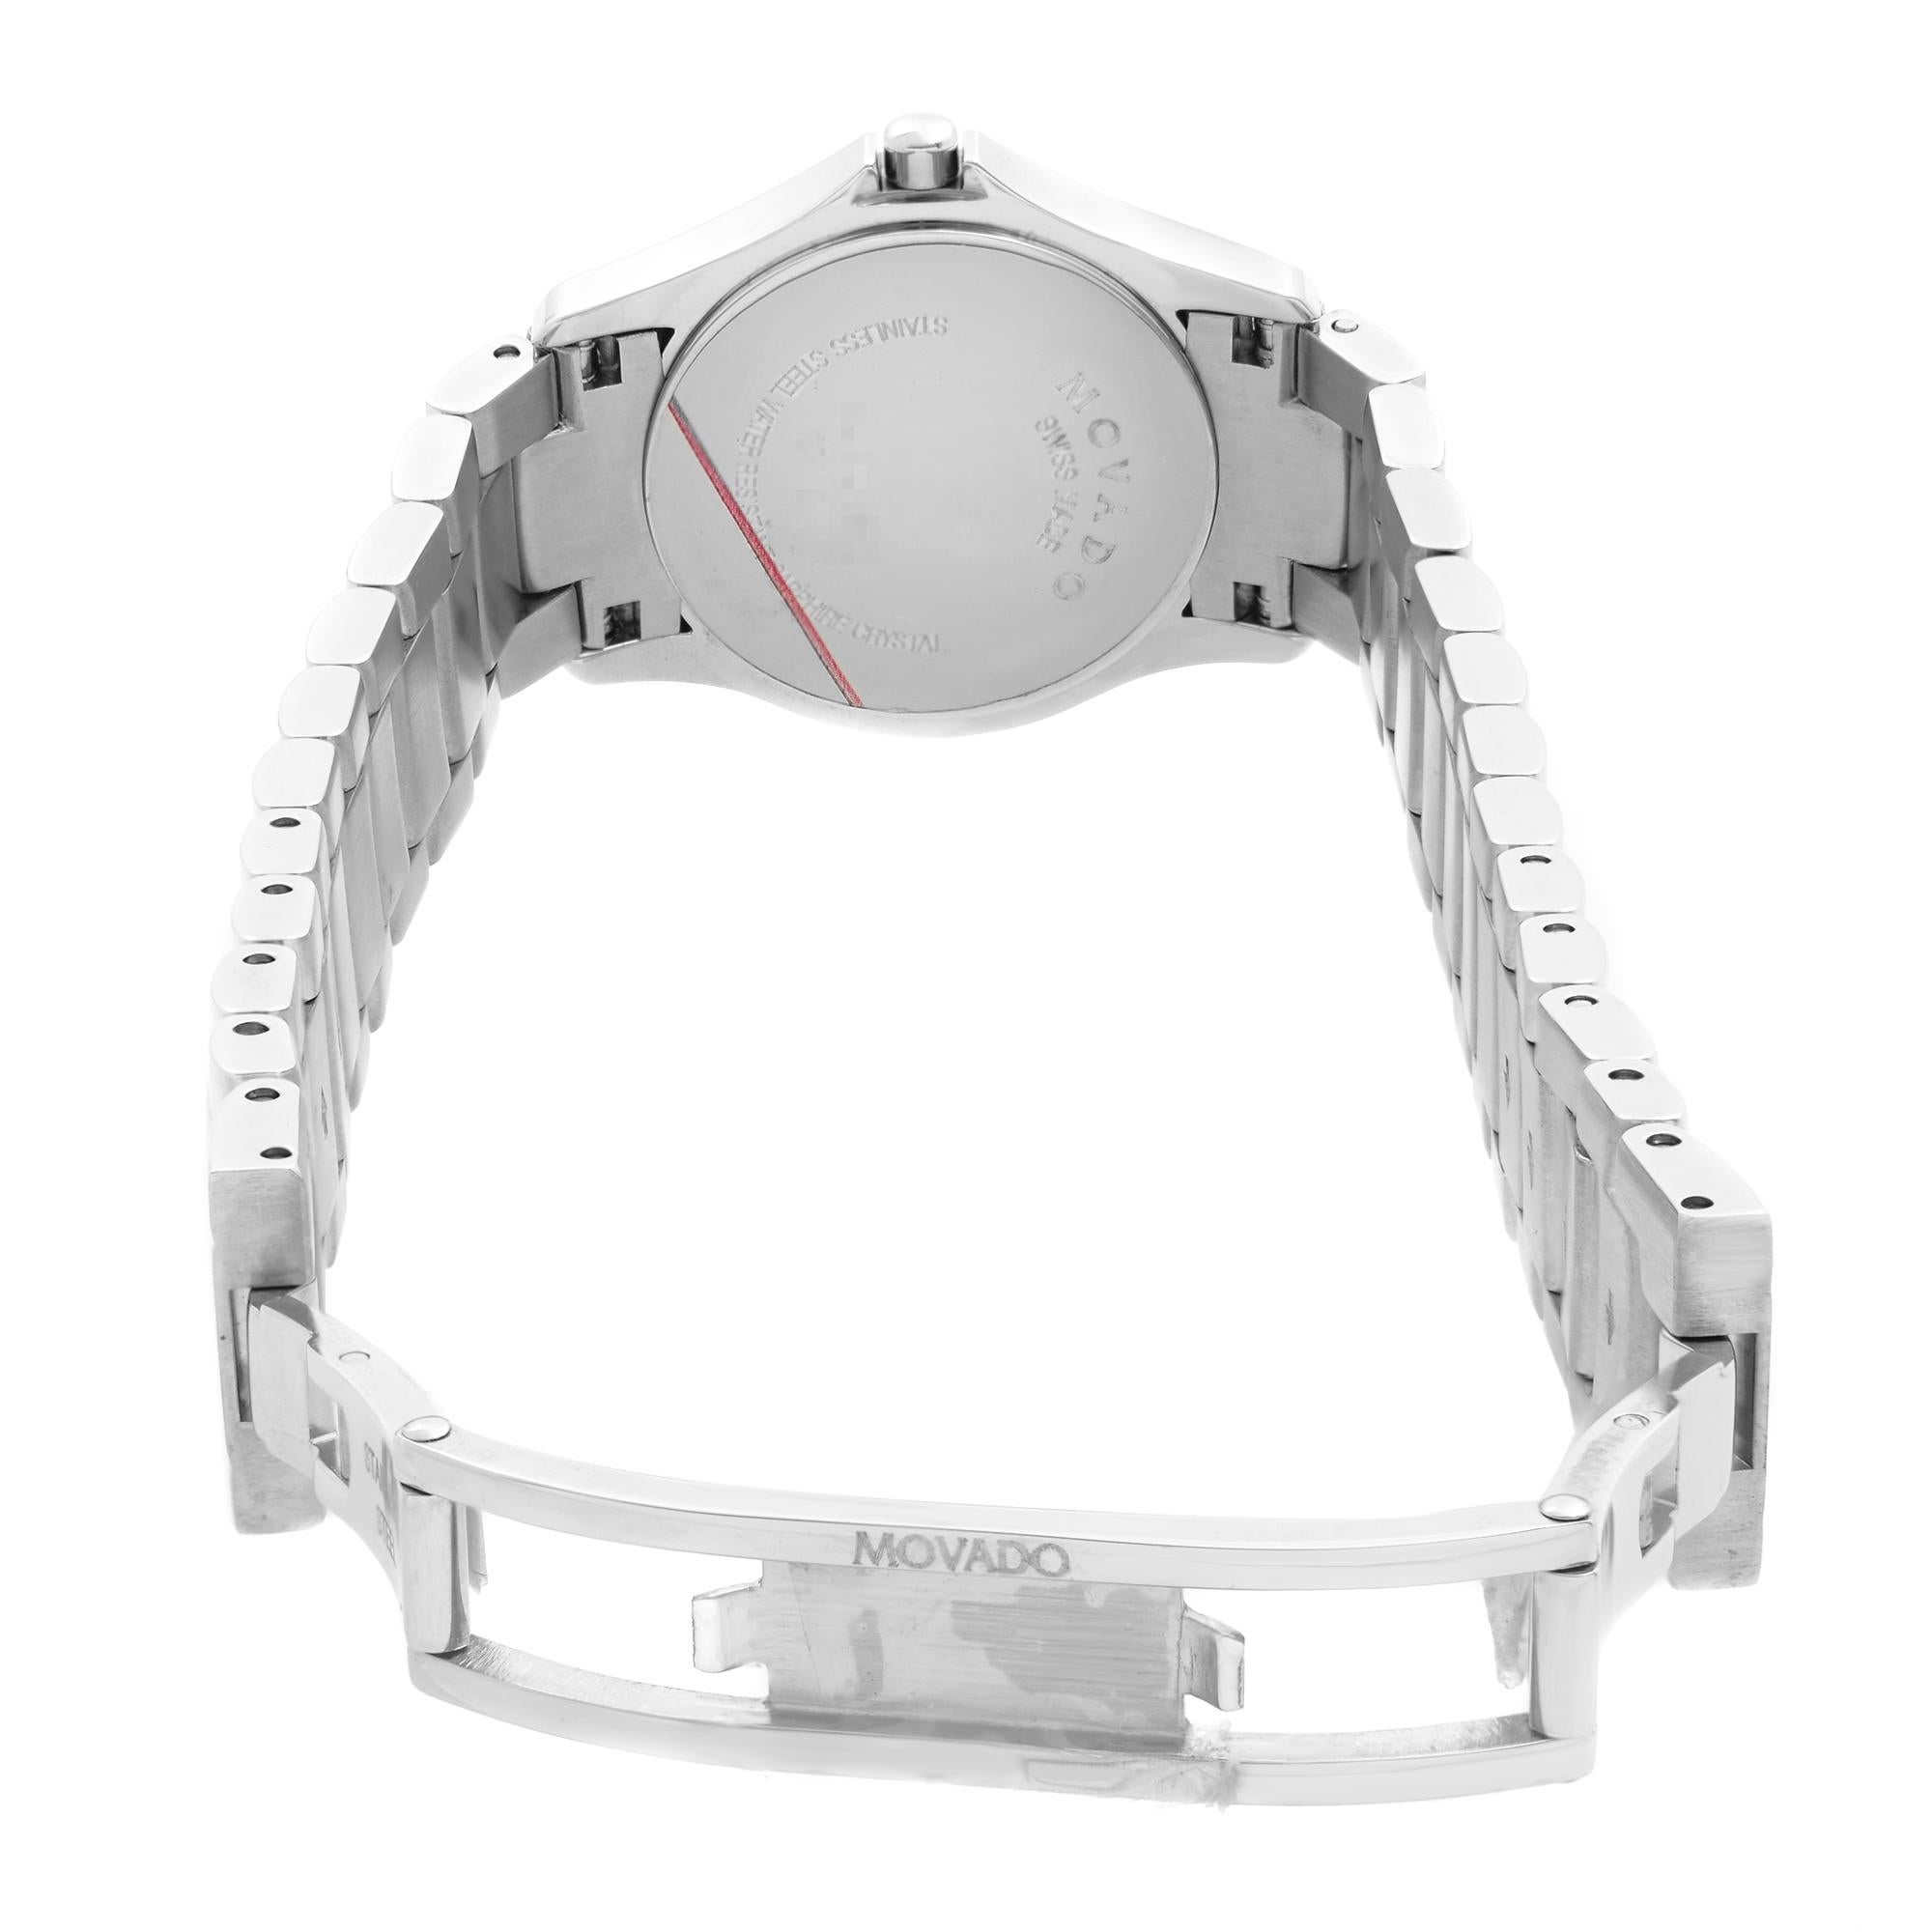 Movado Masino Steel Black Diamond Dial Quartz Ladies Watch 0606186 In New Condition For Sale In New York, NY